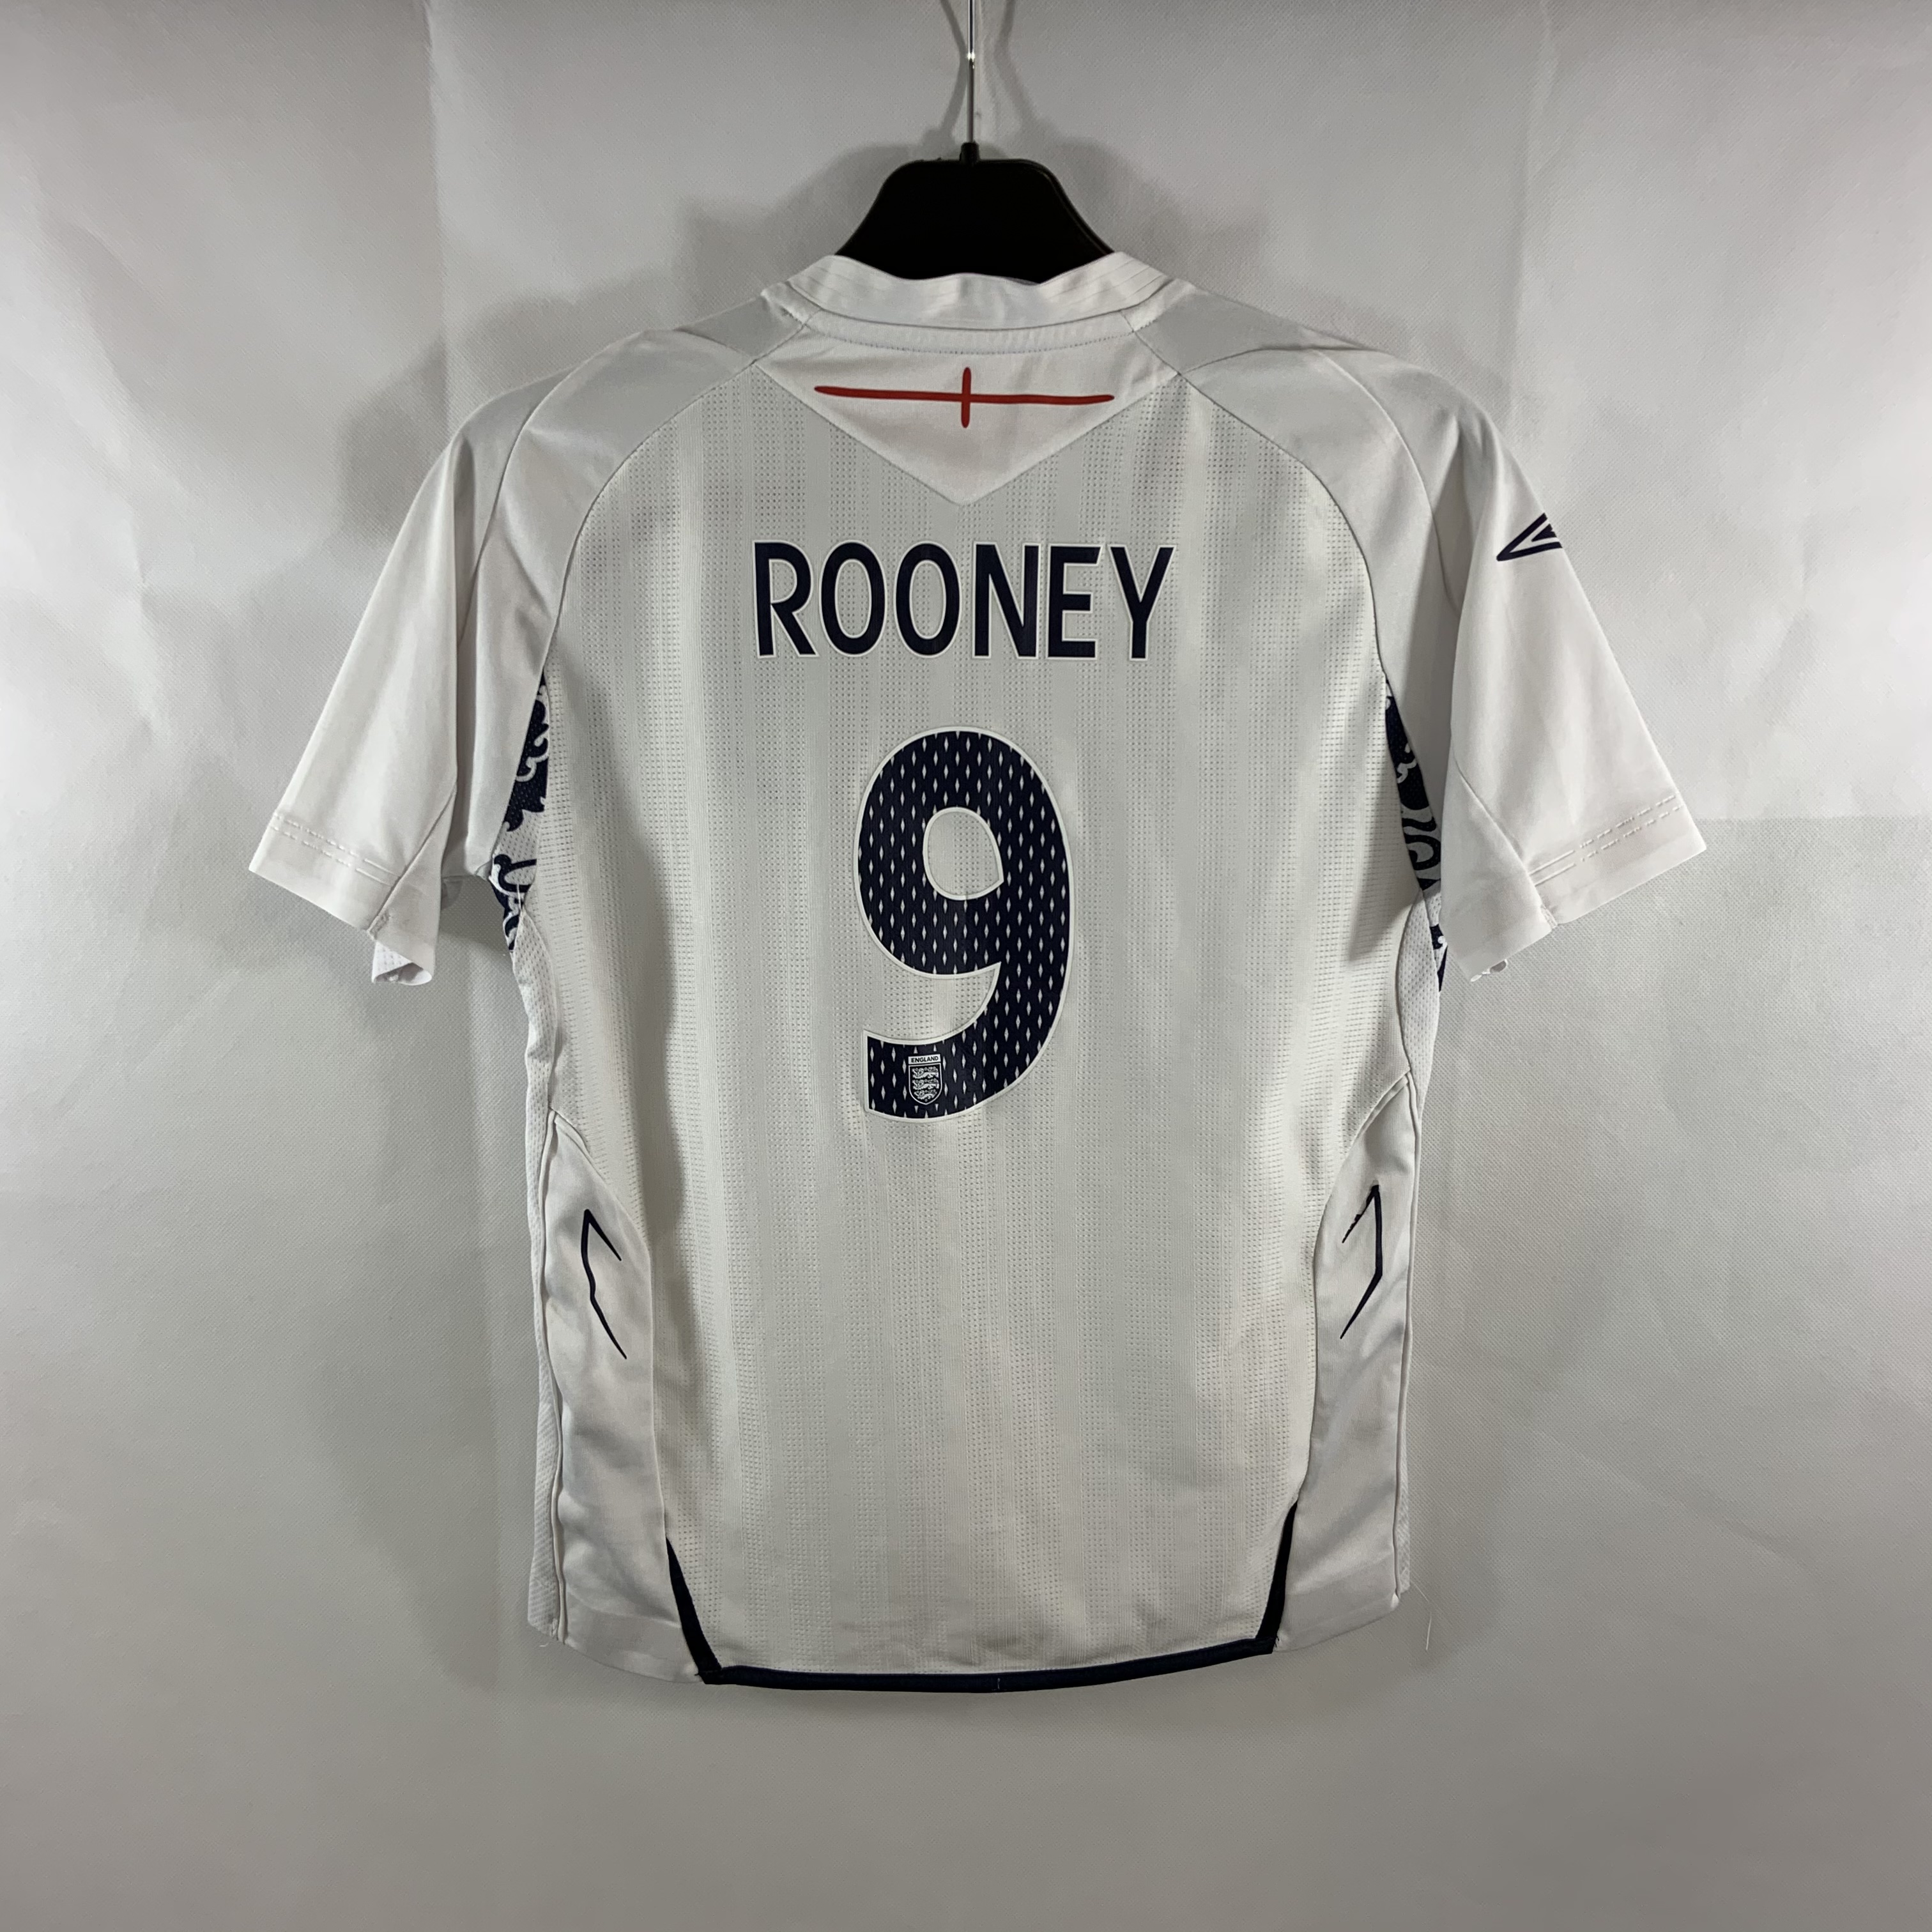 England ROONEY Football Soccer Shirt Jersey Uniform UMBRO 2007-09 Adult S M L XL 